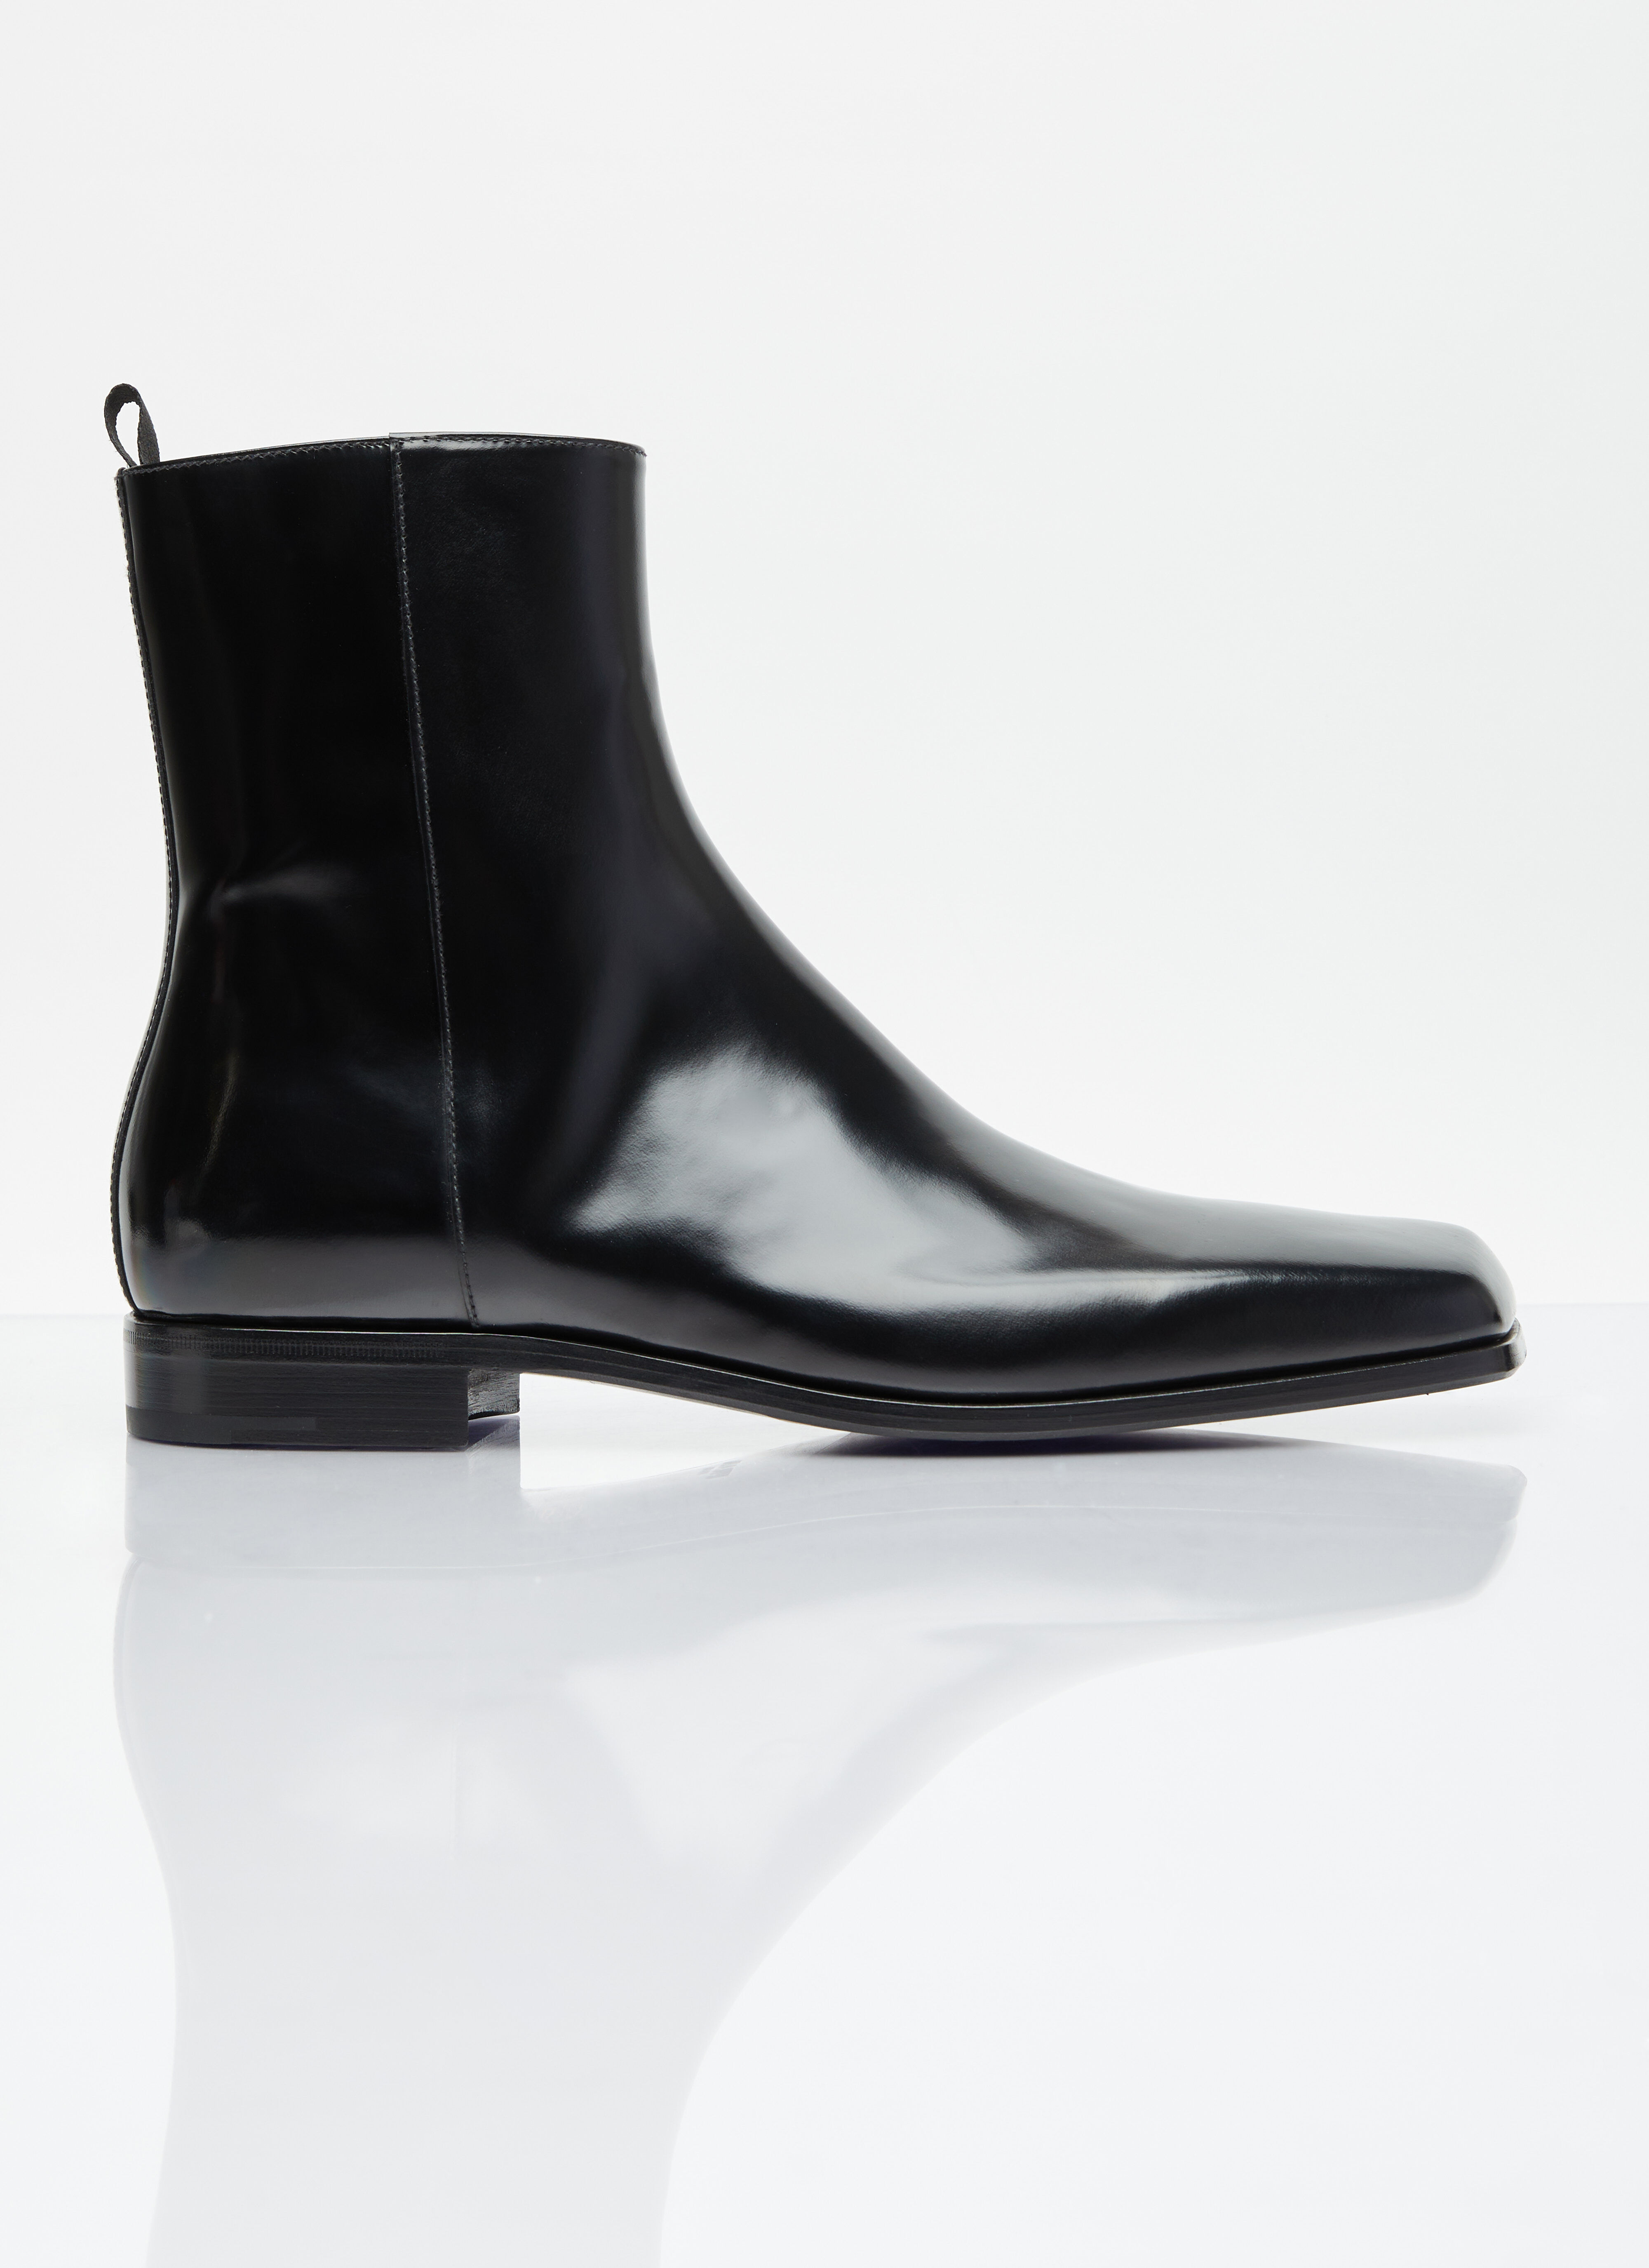 Vivienne Westwood Brushed Leather Boots Grey vvw0156010